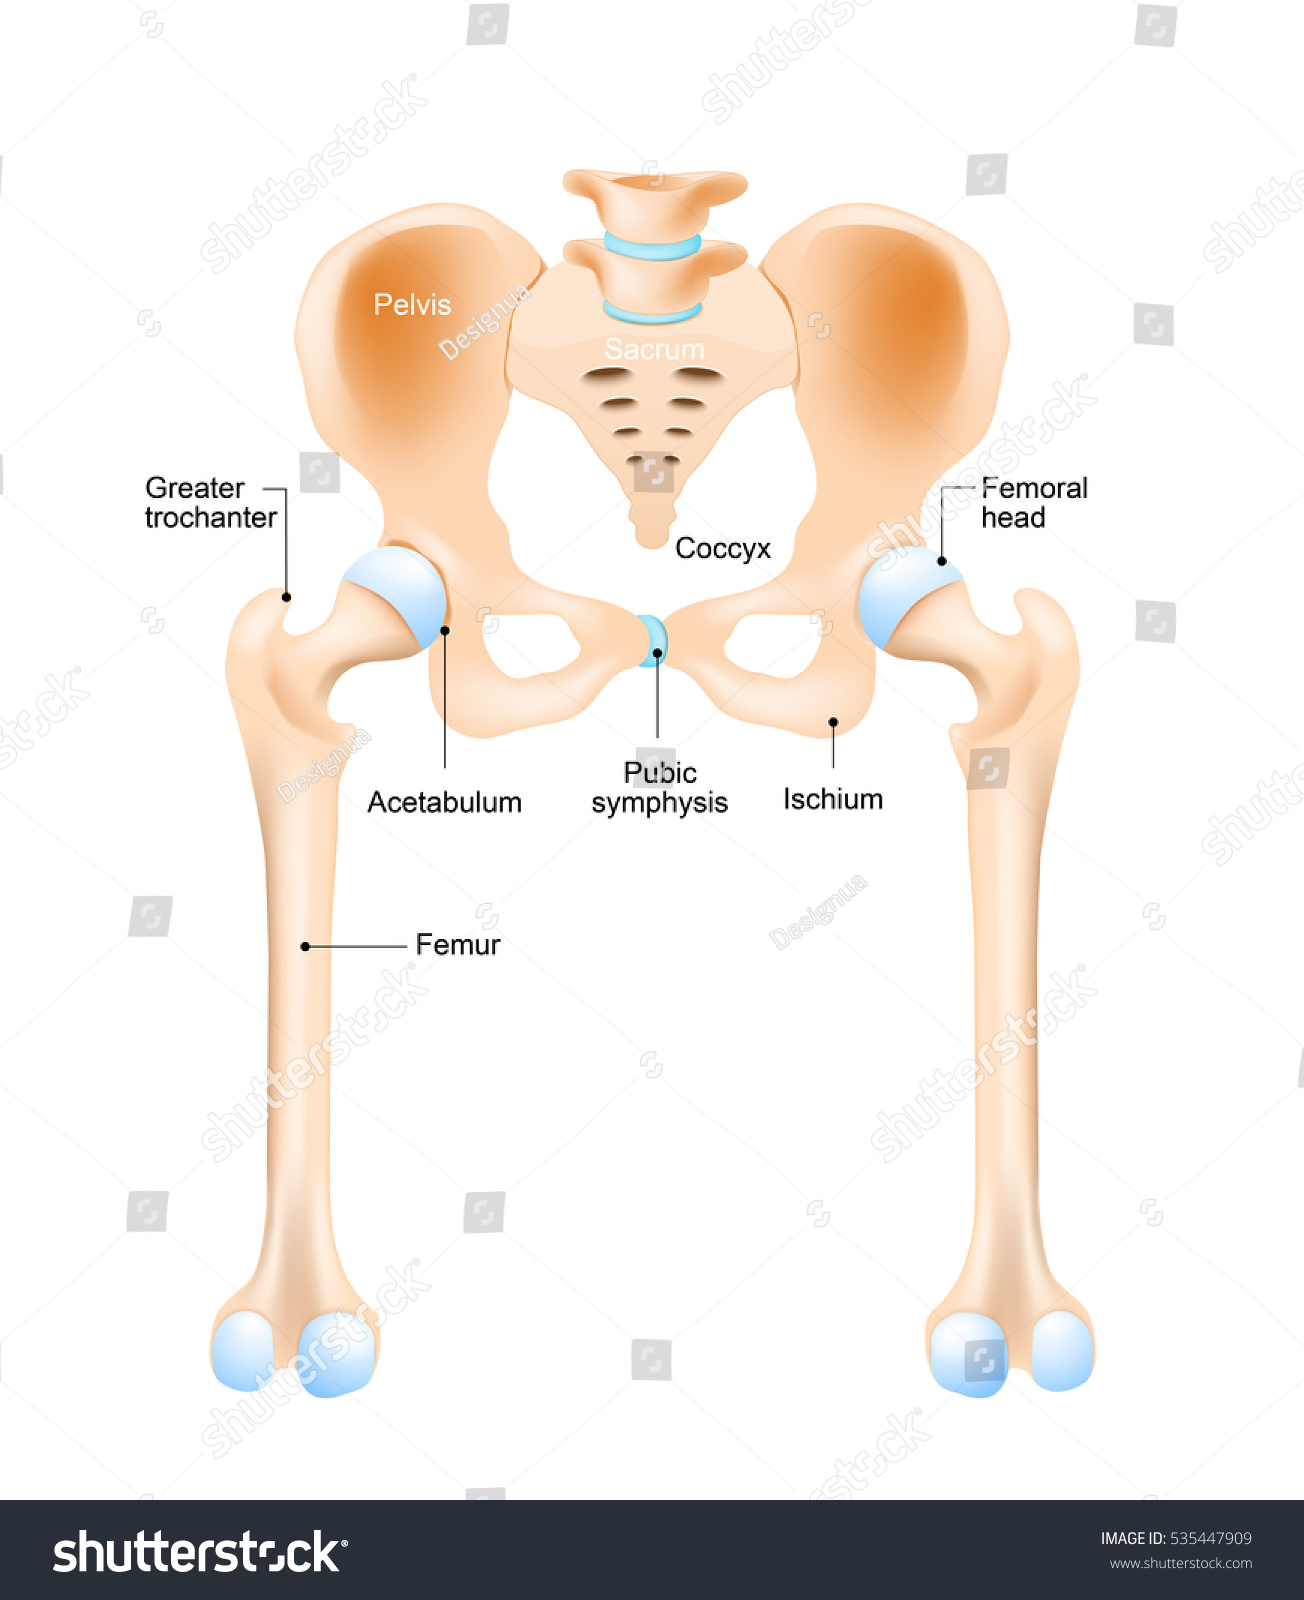 Anatomy Hip Human Femur Pelvis Stock Illustration 535447909 | Shutterstock